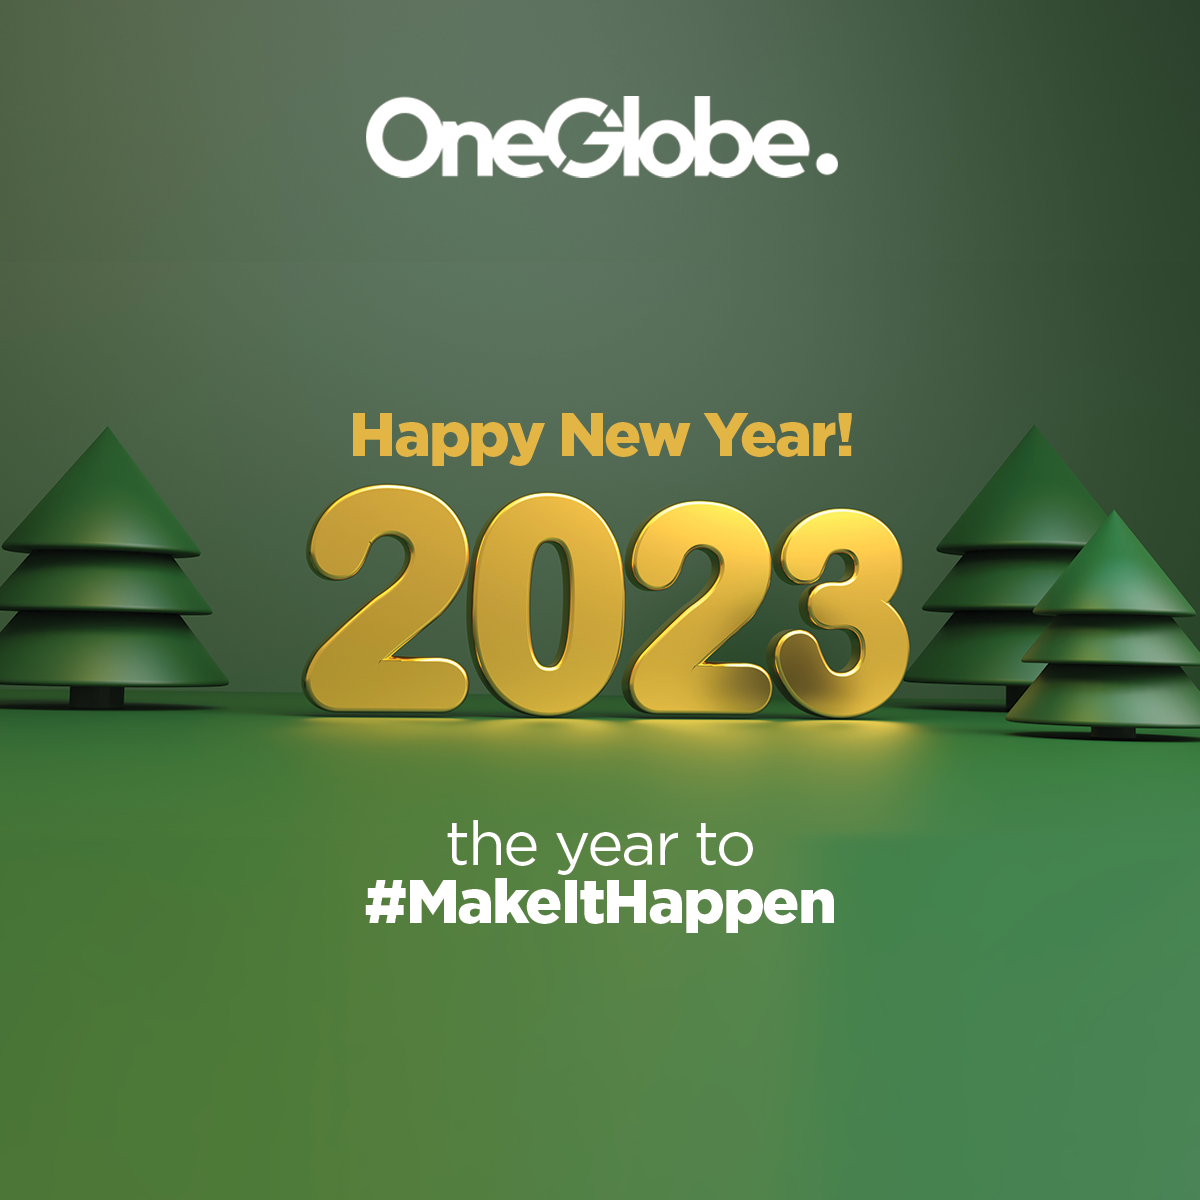 OneGlobeJanuary 1 Newsletter #January, 2023